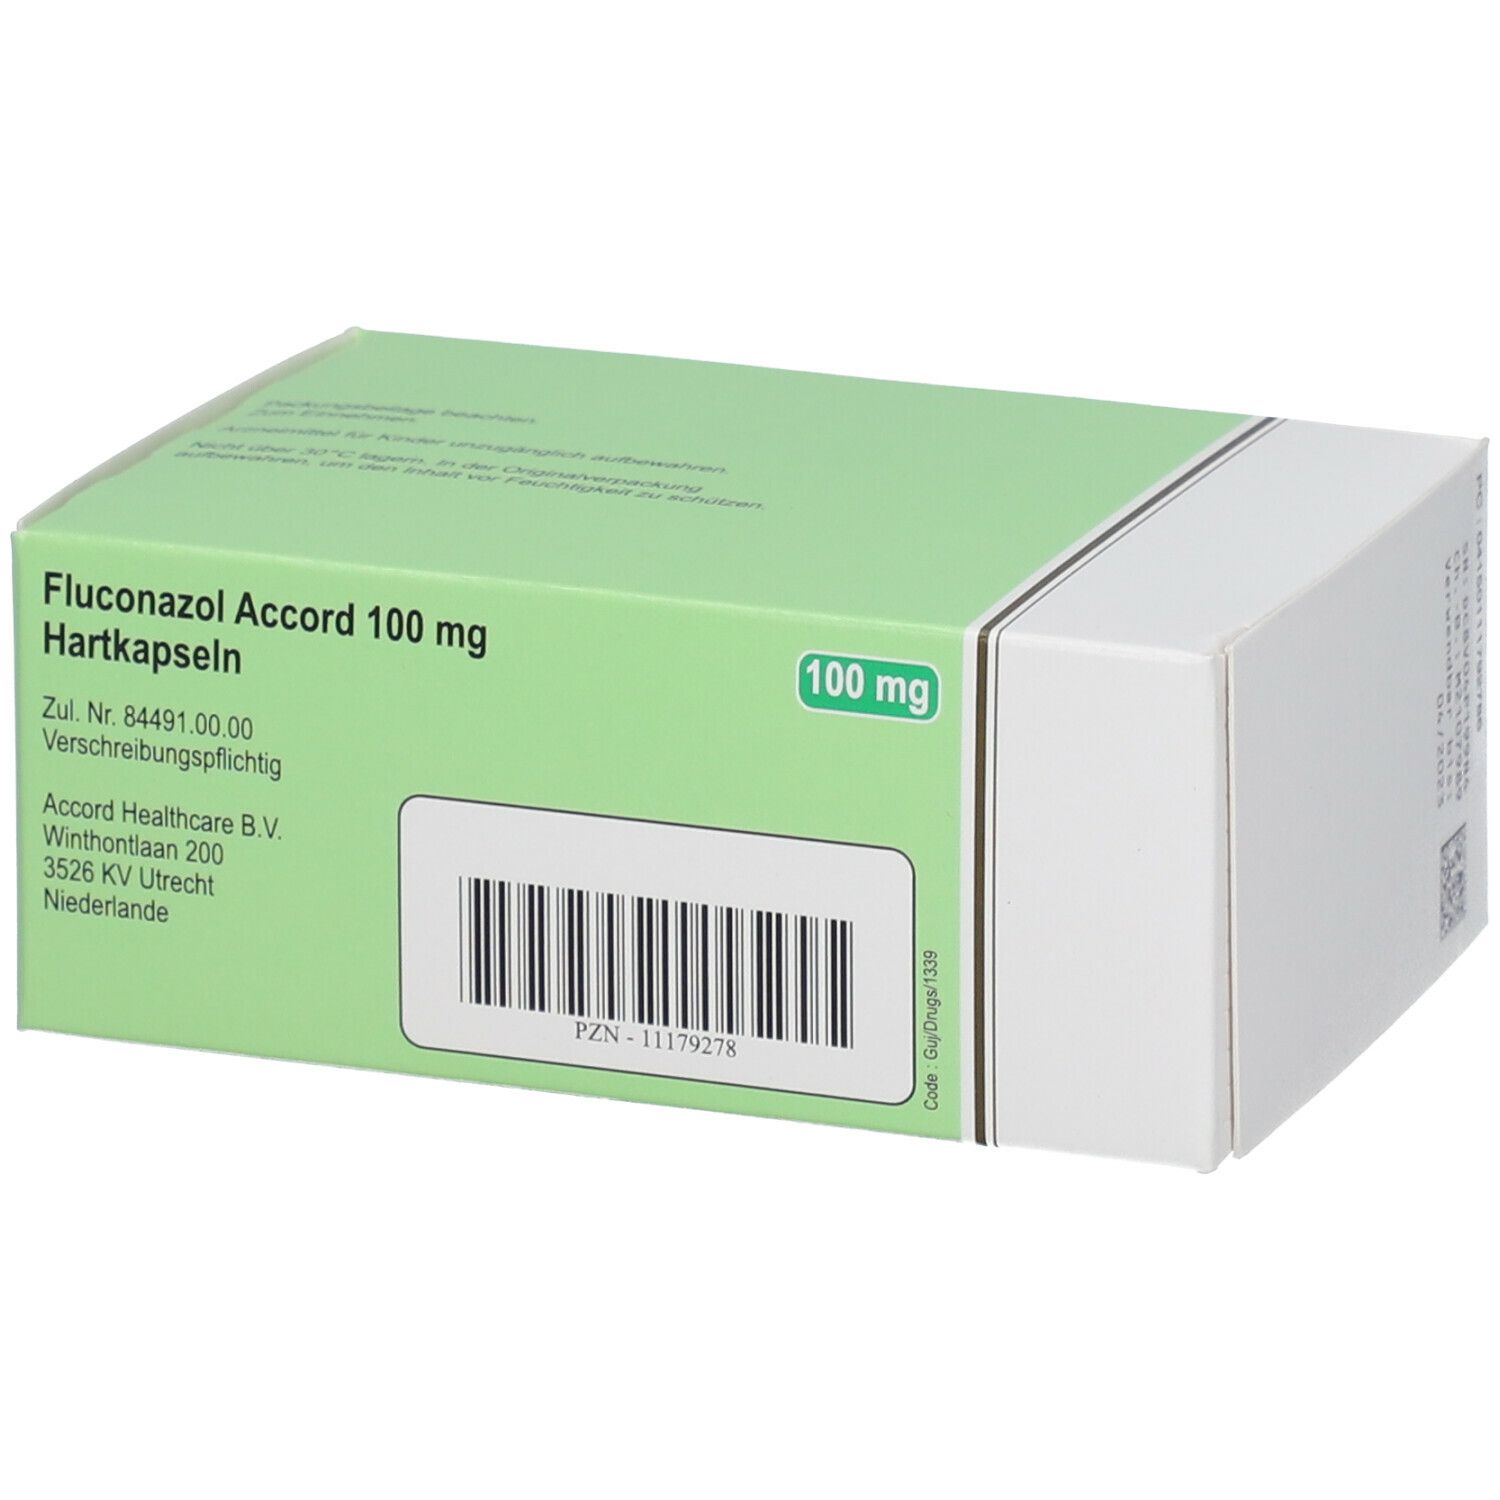 Fluconazol Accord 100 mg